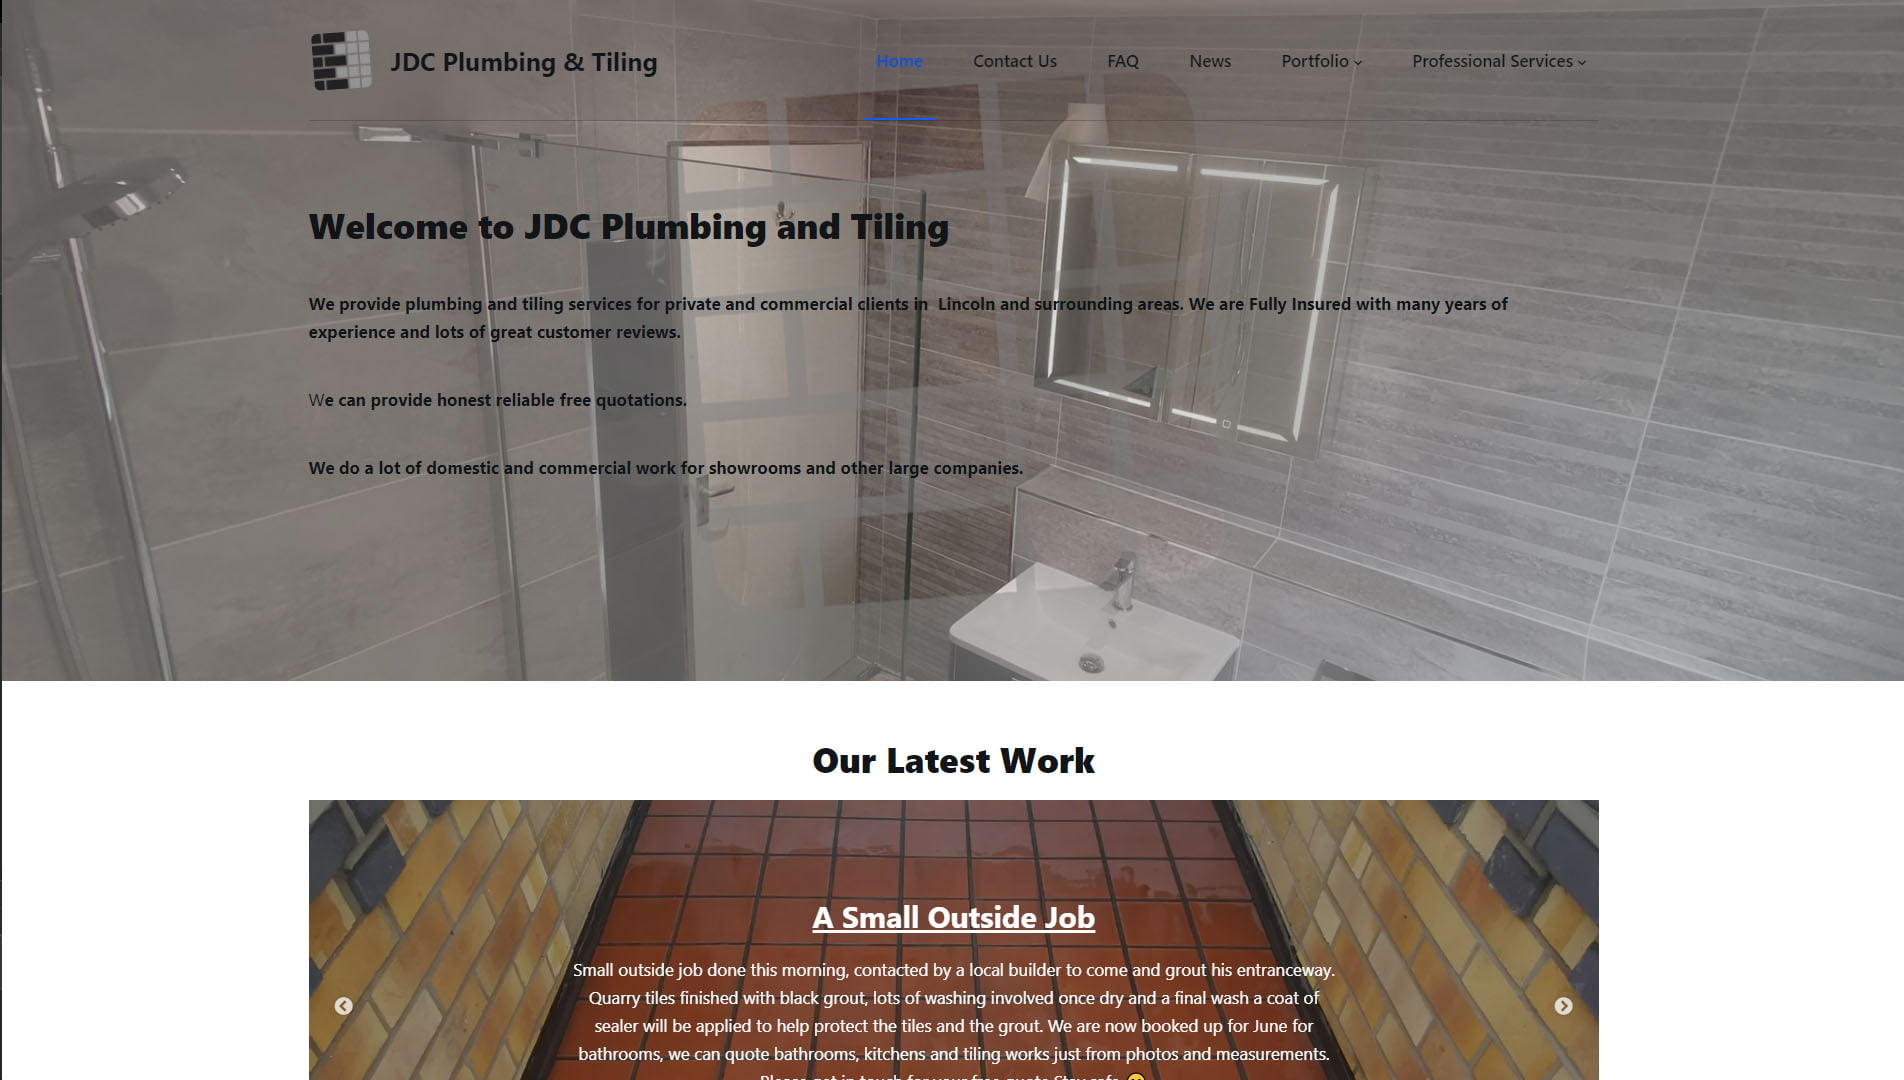 JDC Plumbing and Tiling website screenshot